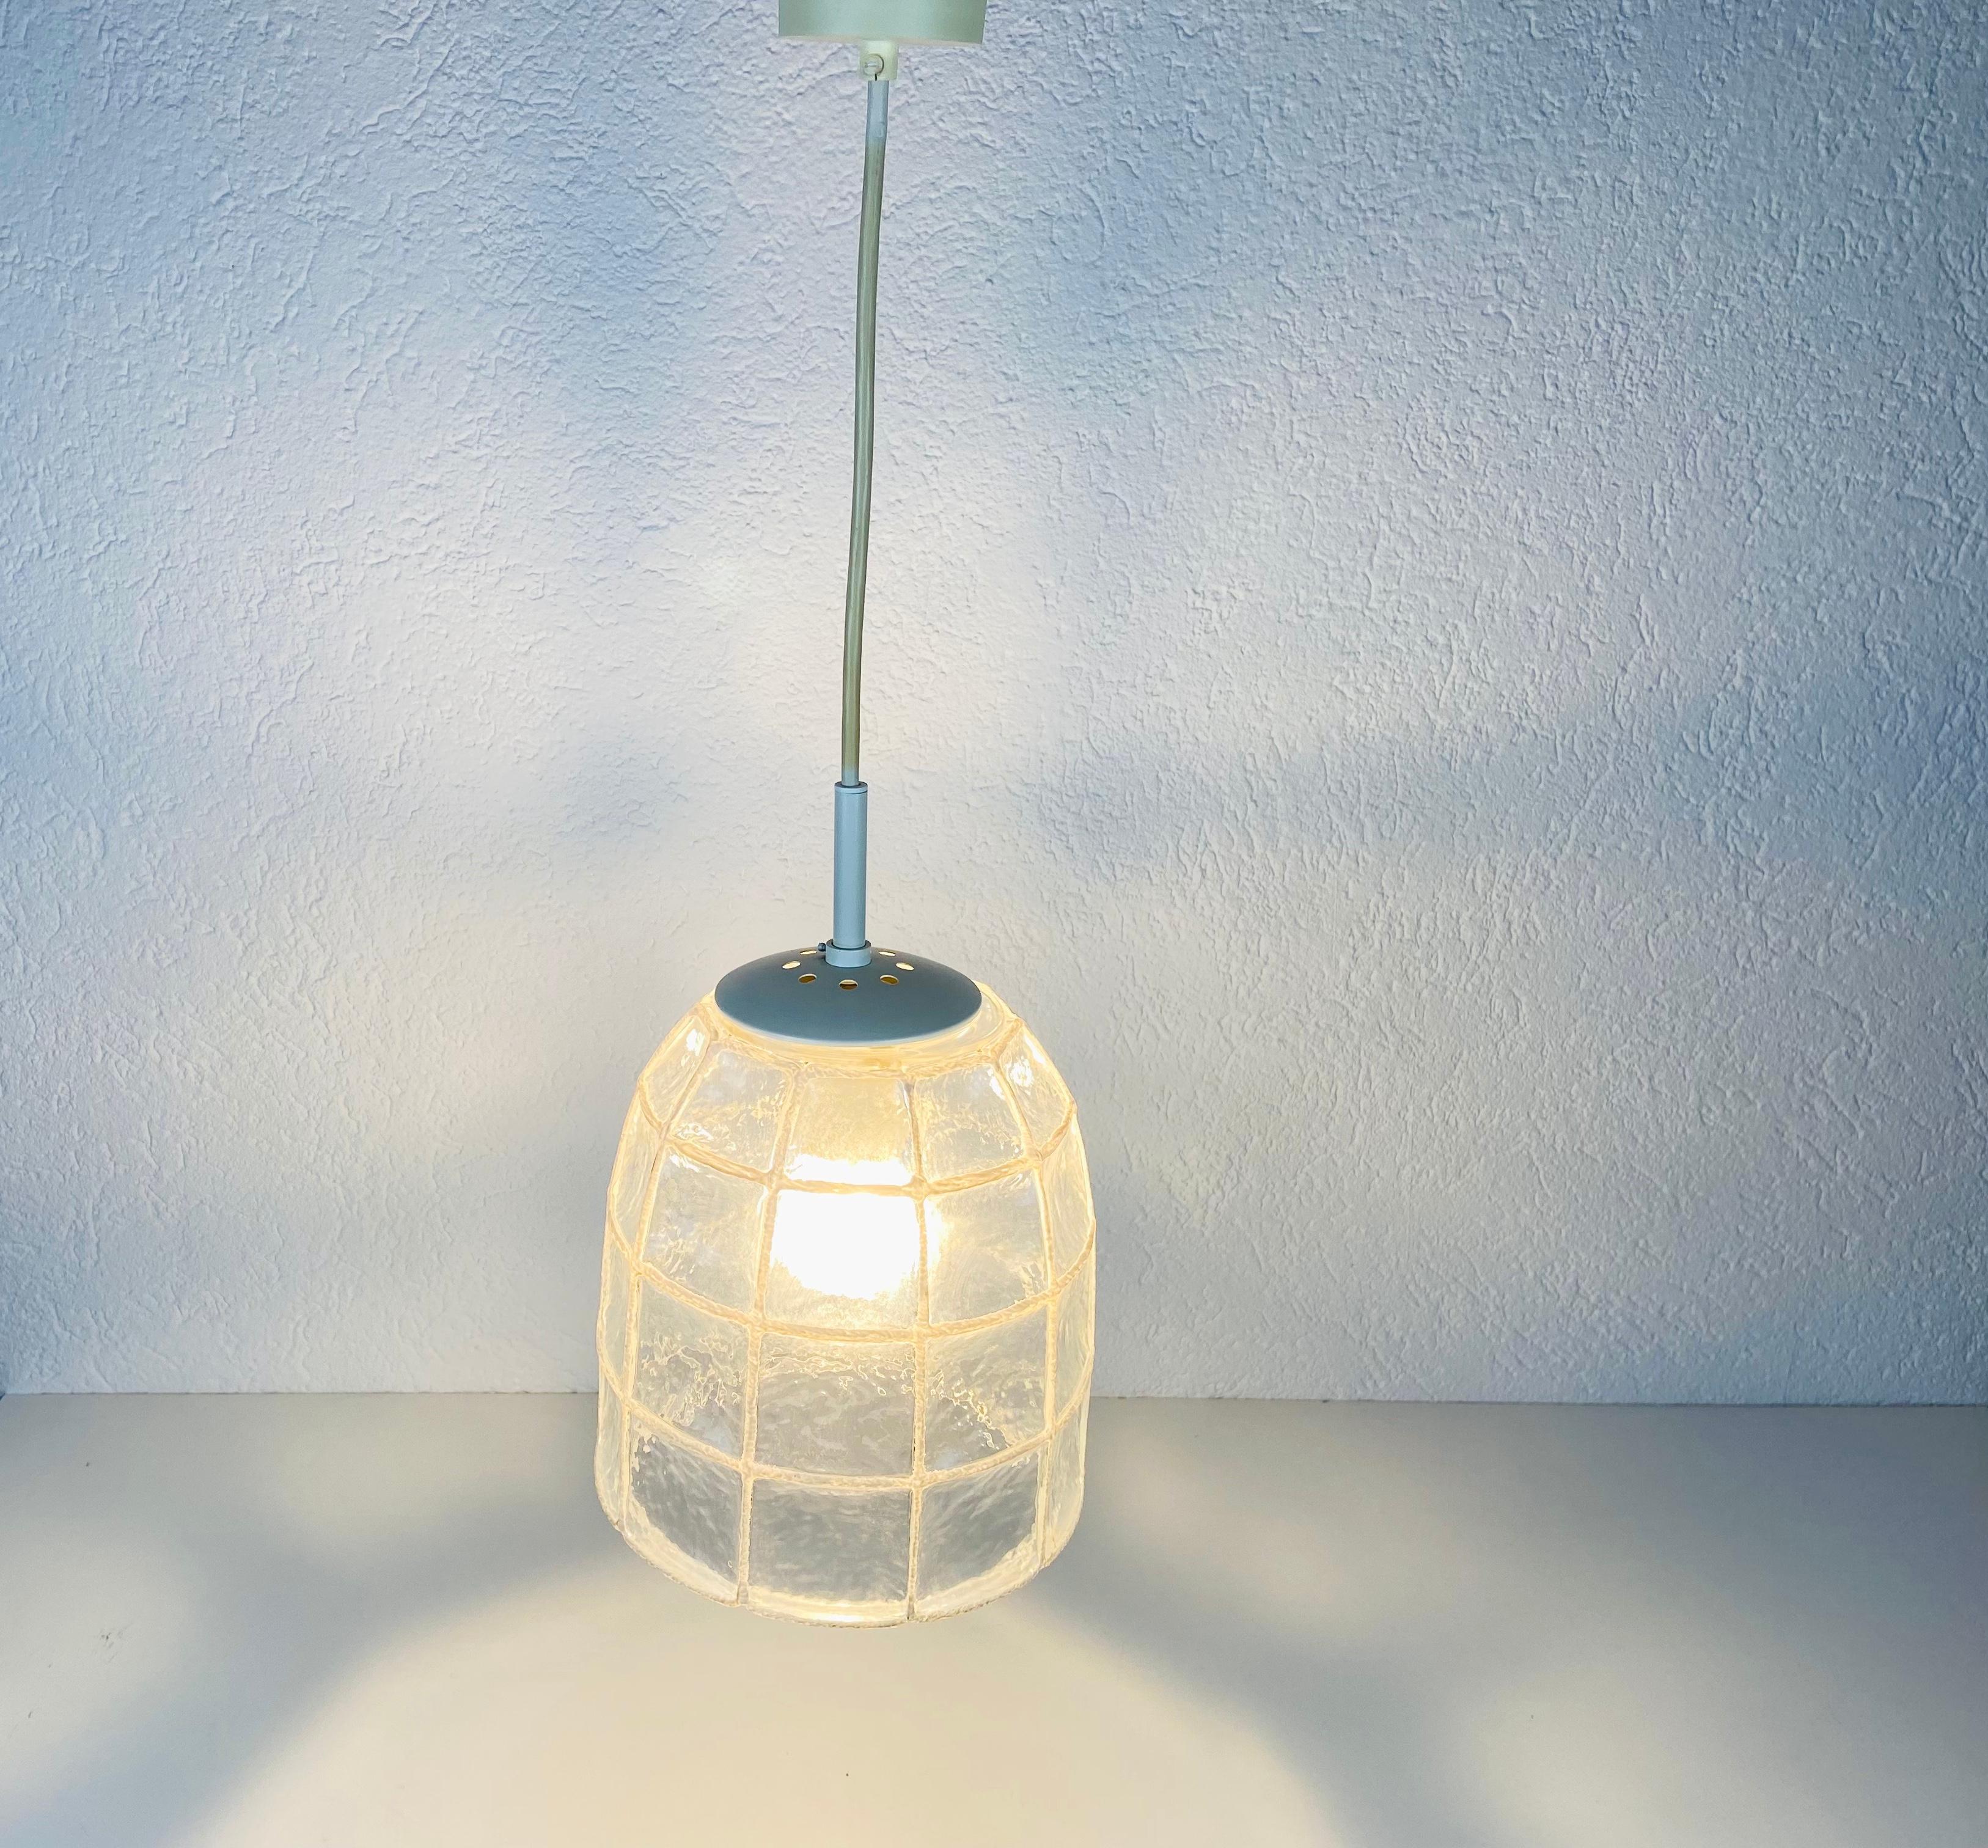 Midcentury Iron and Bubble Glass Pendant lamp by Glashütte Limburg, 1960s For Sale 2